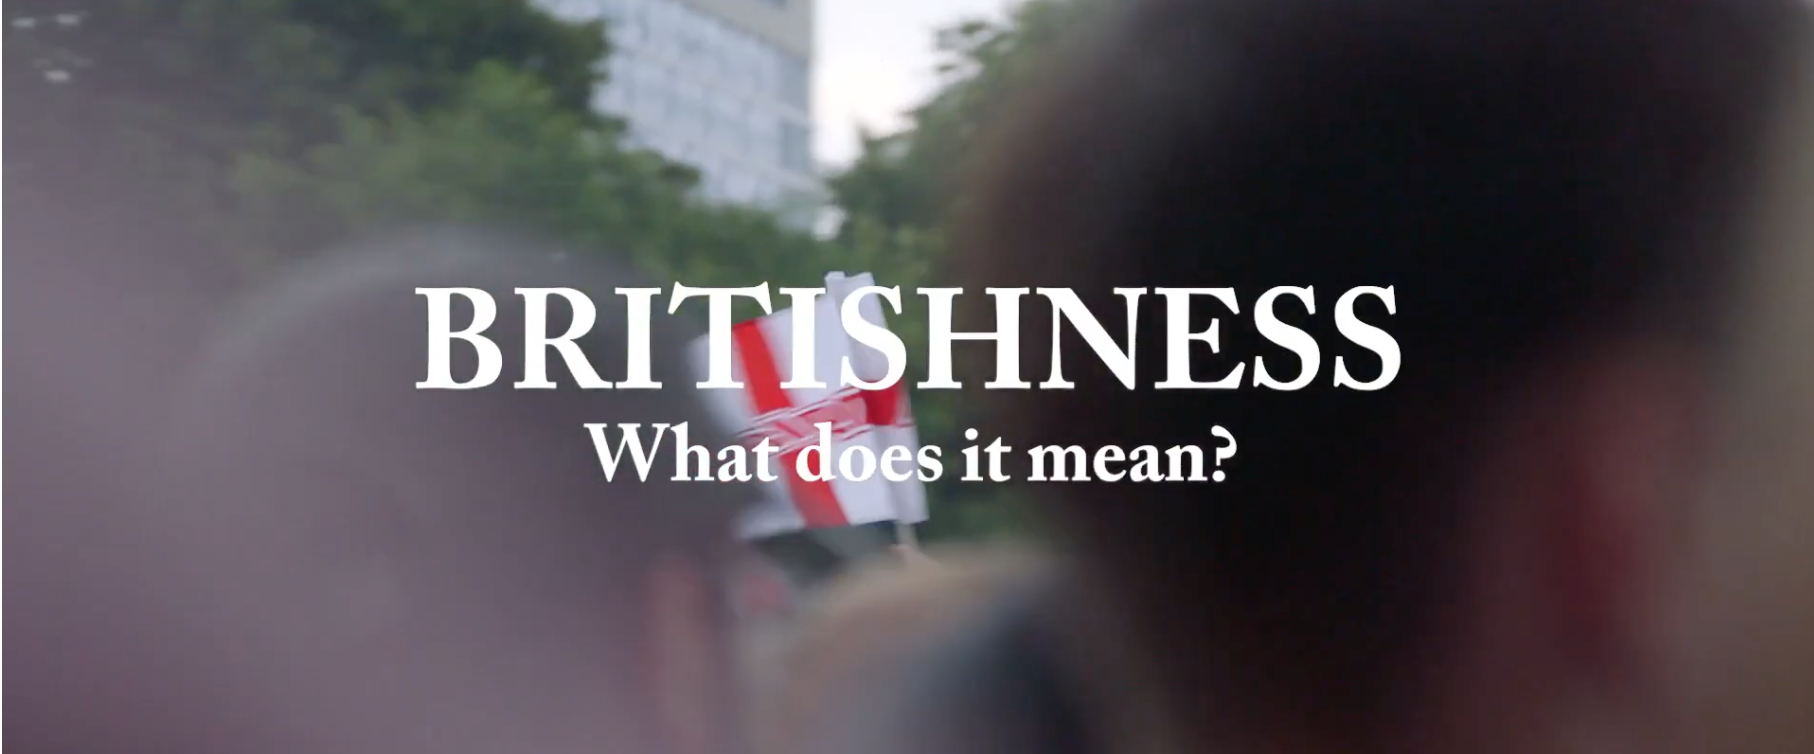 britishness-video-still-5.png